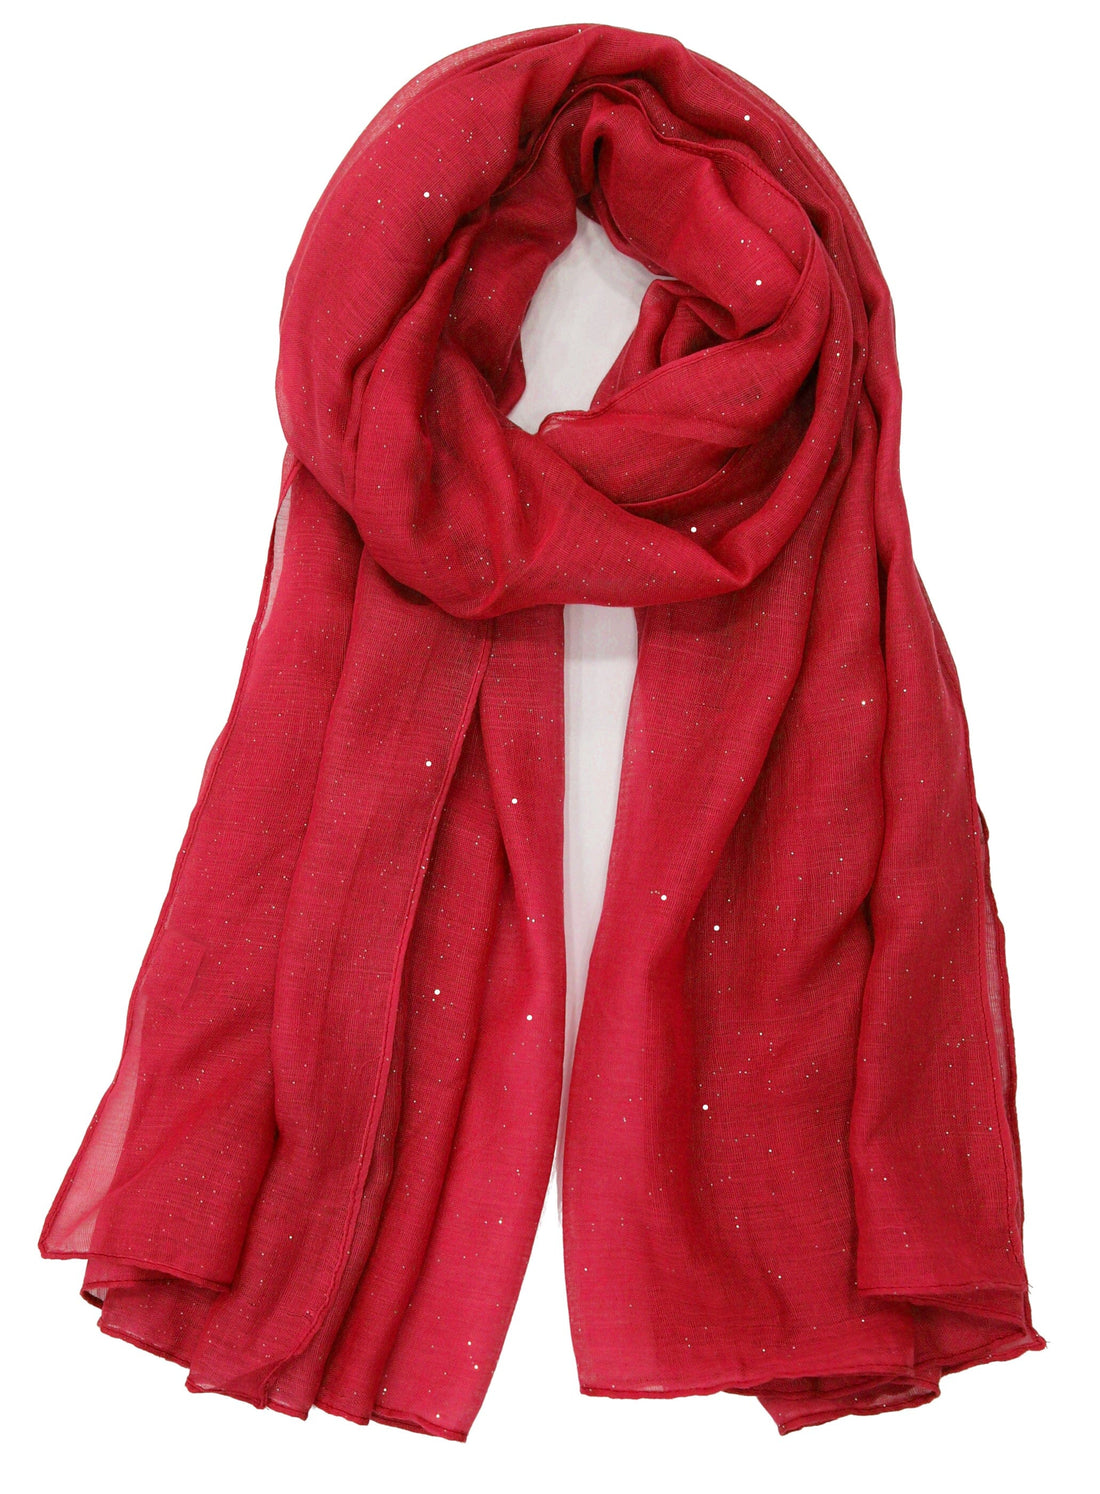 Foulard rouge femme foulard 